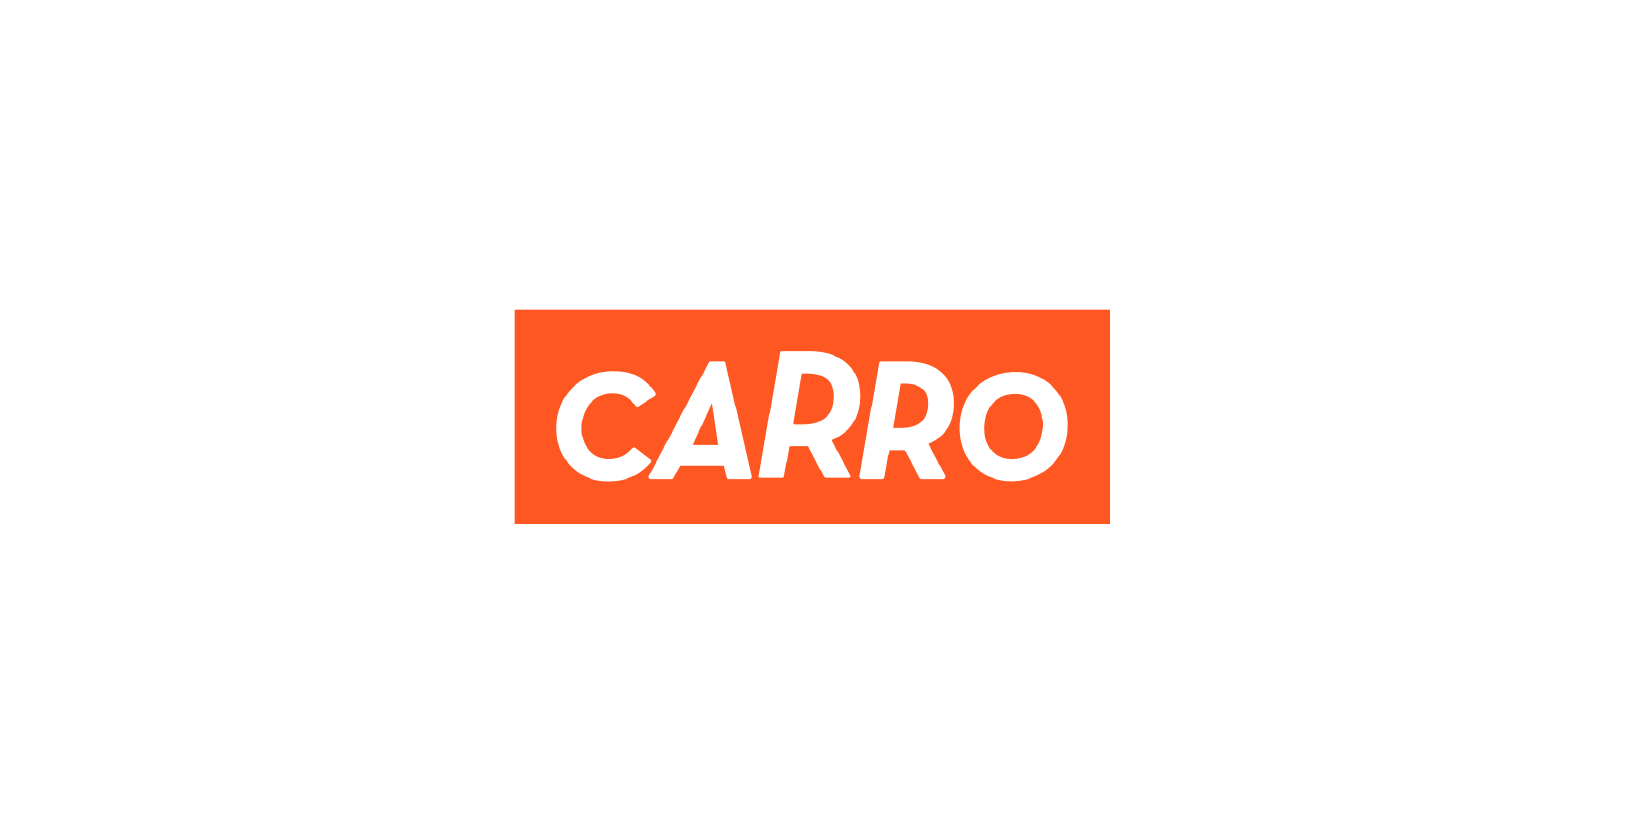 Vision Fund investment portfolio company Carro's logo